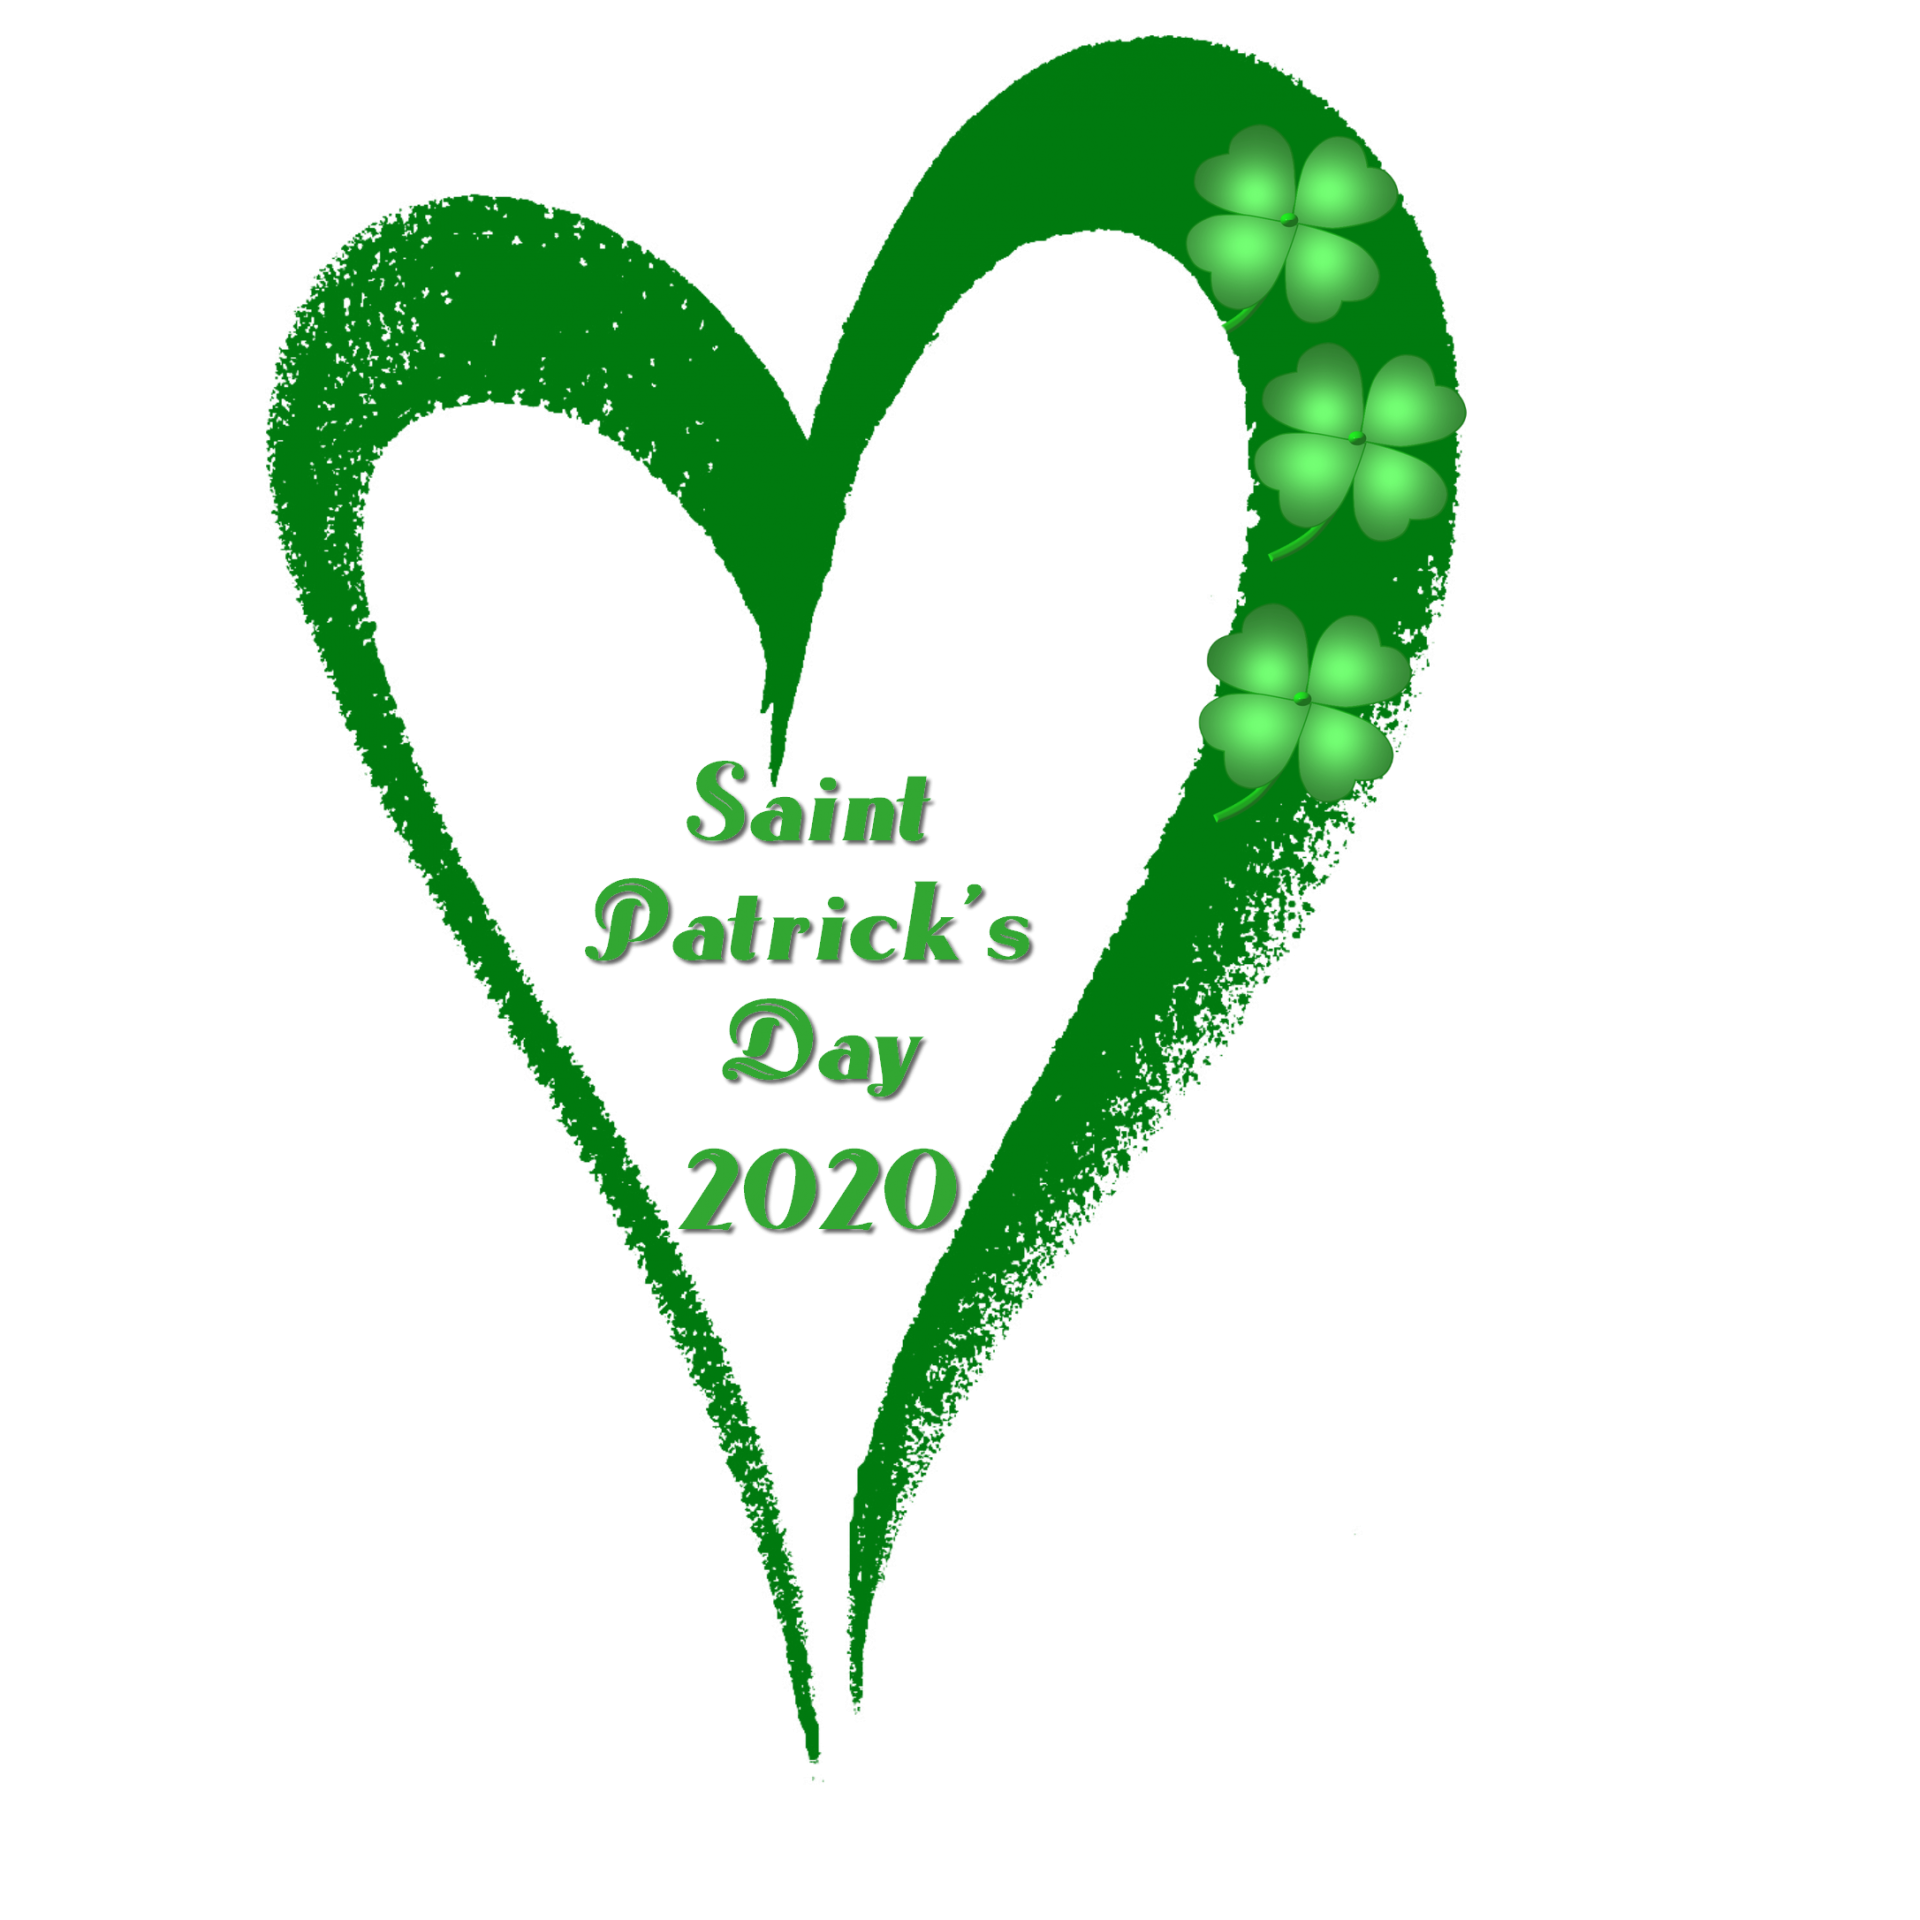 Saint Patrick's Day 2020 - 2